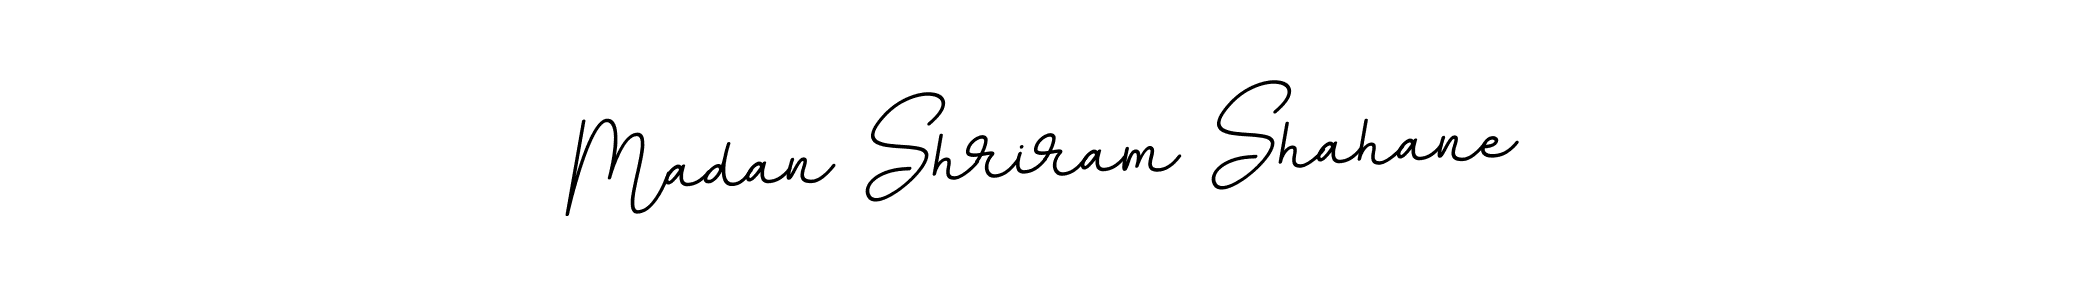 How to Draw Madan Shriram Shahane signature style? BallpointsItalic-DORy9 is a latest design signature styles for name Madan Shriram Shahane. Madan Shriram Shahane signature style 11 images and pictures png